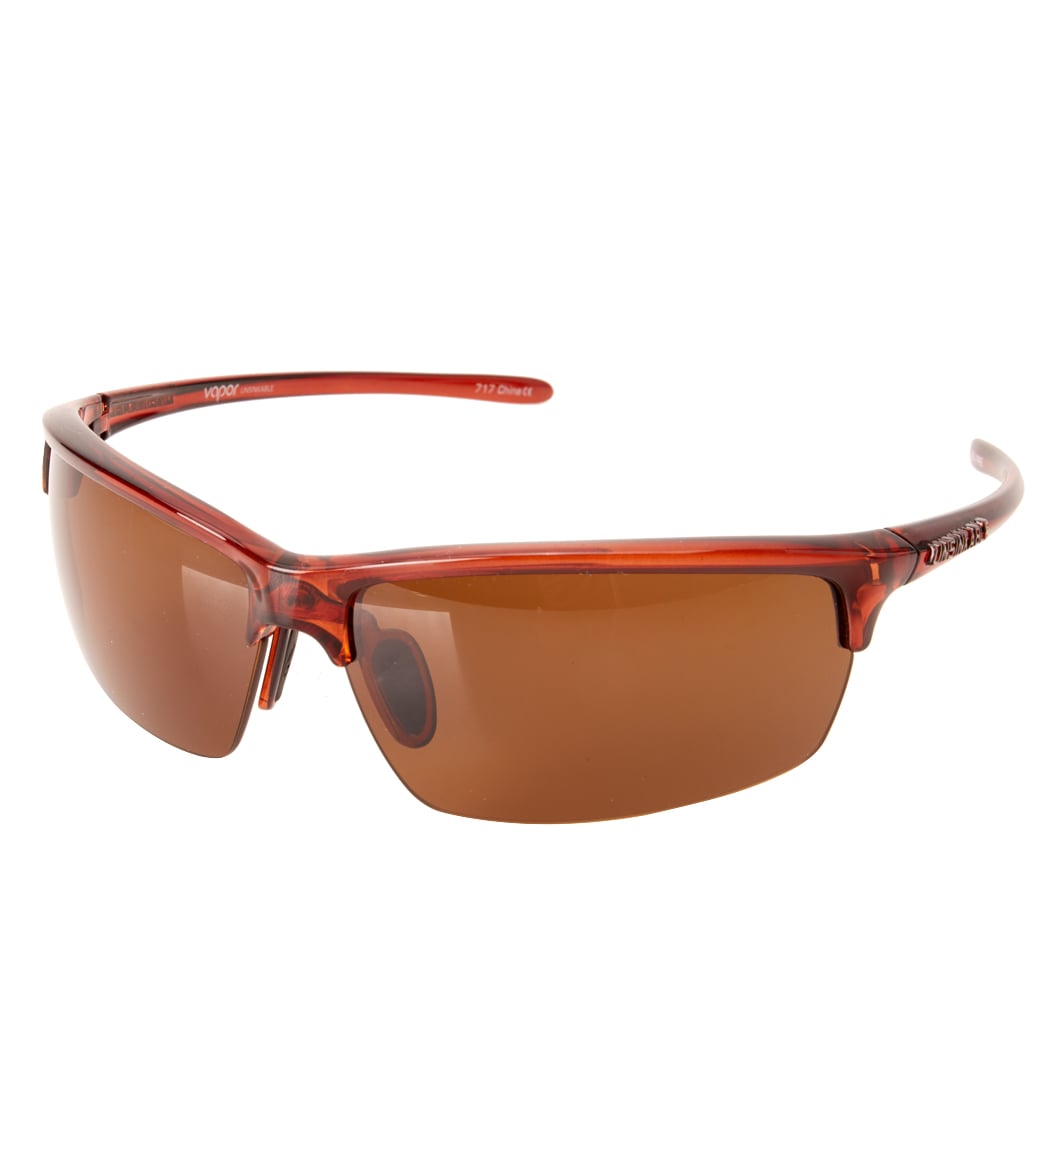 Unsinkable Polarized Vapor Floating Sunglasses - Caramel/Brown - Swimoutlet.com